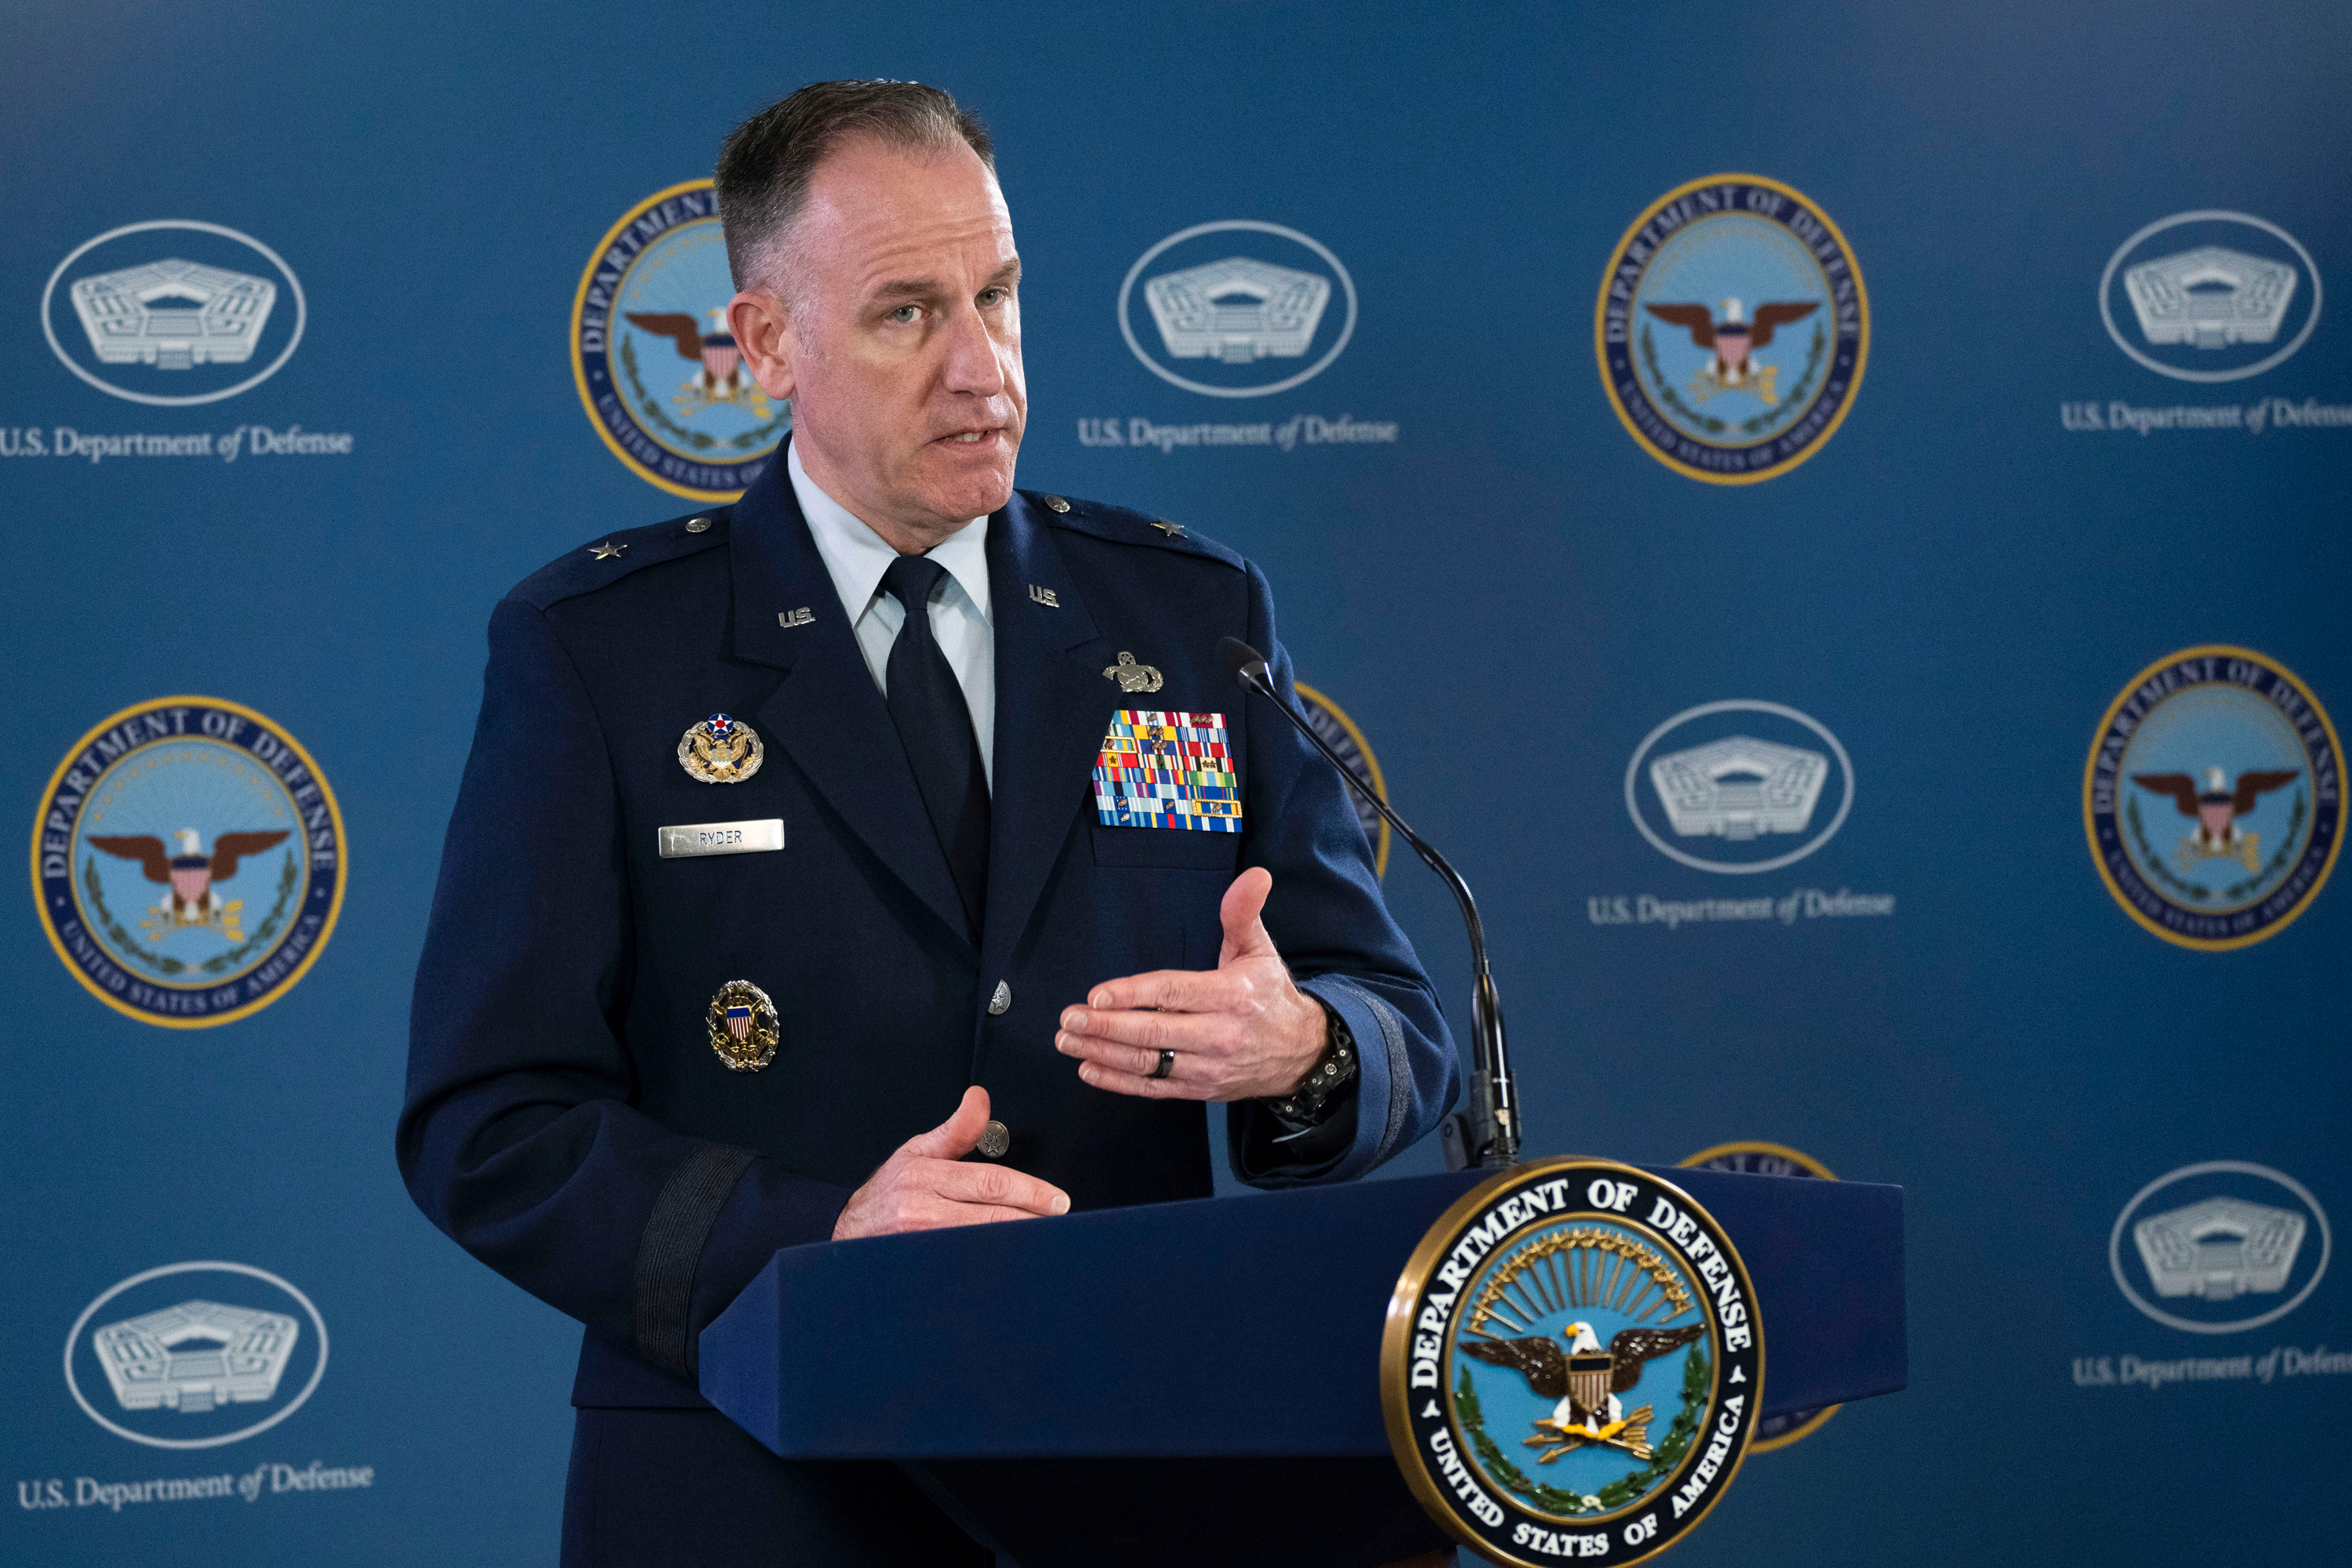 Pentagon spokesman Air Force Brig. Gen. Patrick Ryder speaks during a briefing at the Pentagon in Washington, DC on Thursday.